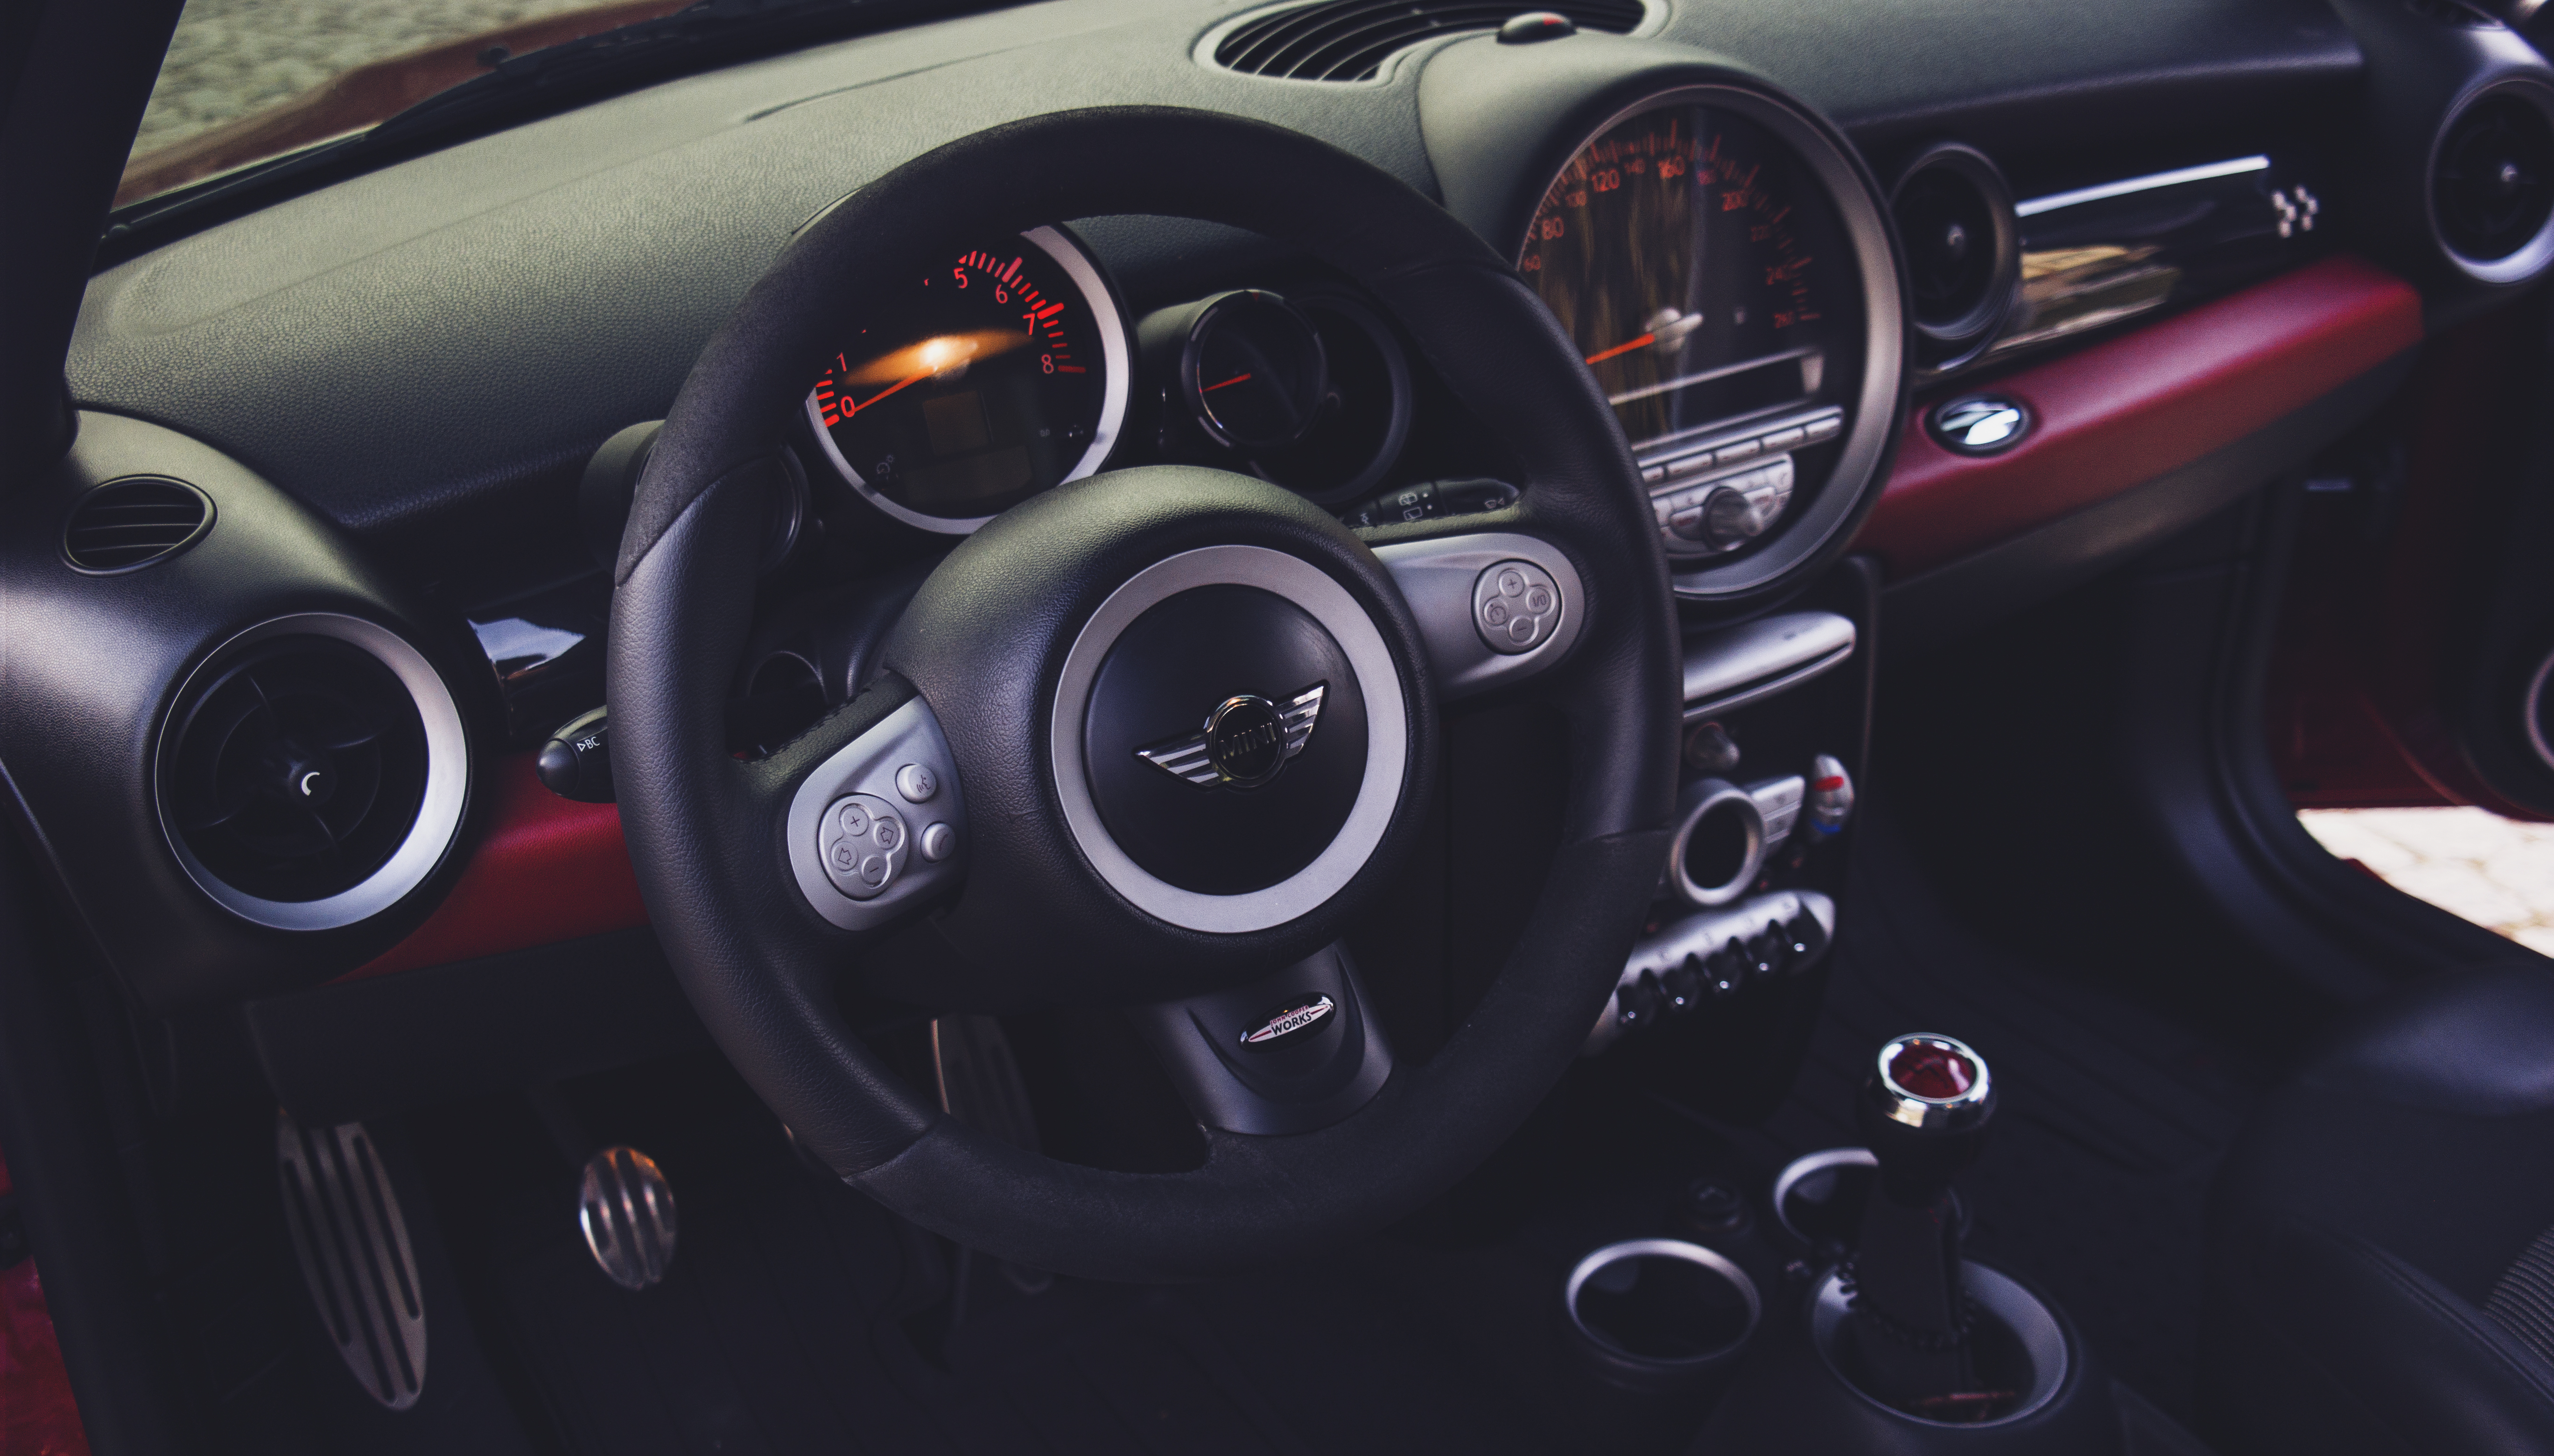 HD wallpaper car interior, mini cooper, cars, steering wheel, rudder, vehicle interior